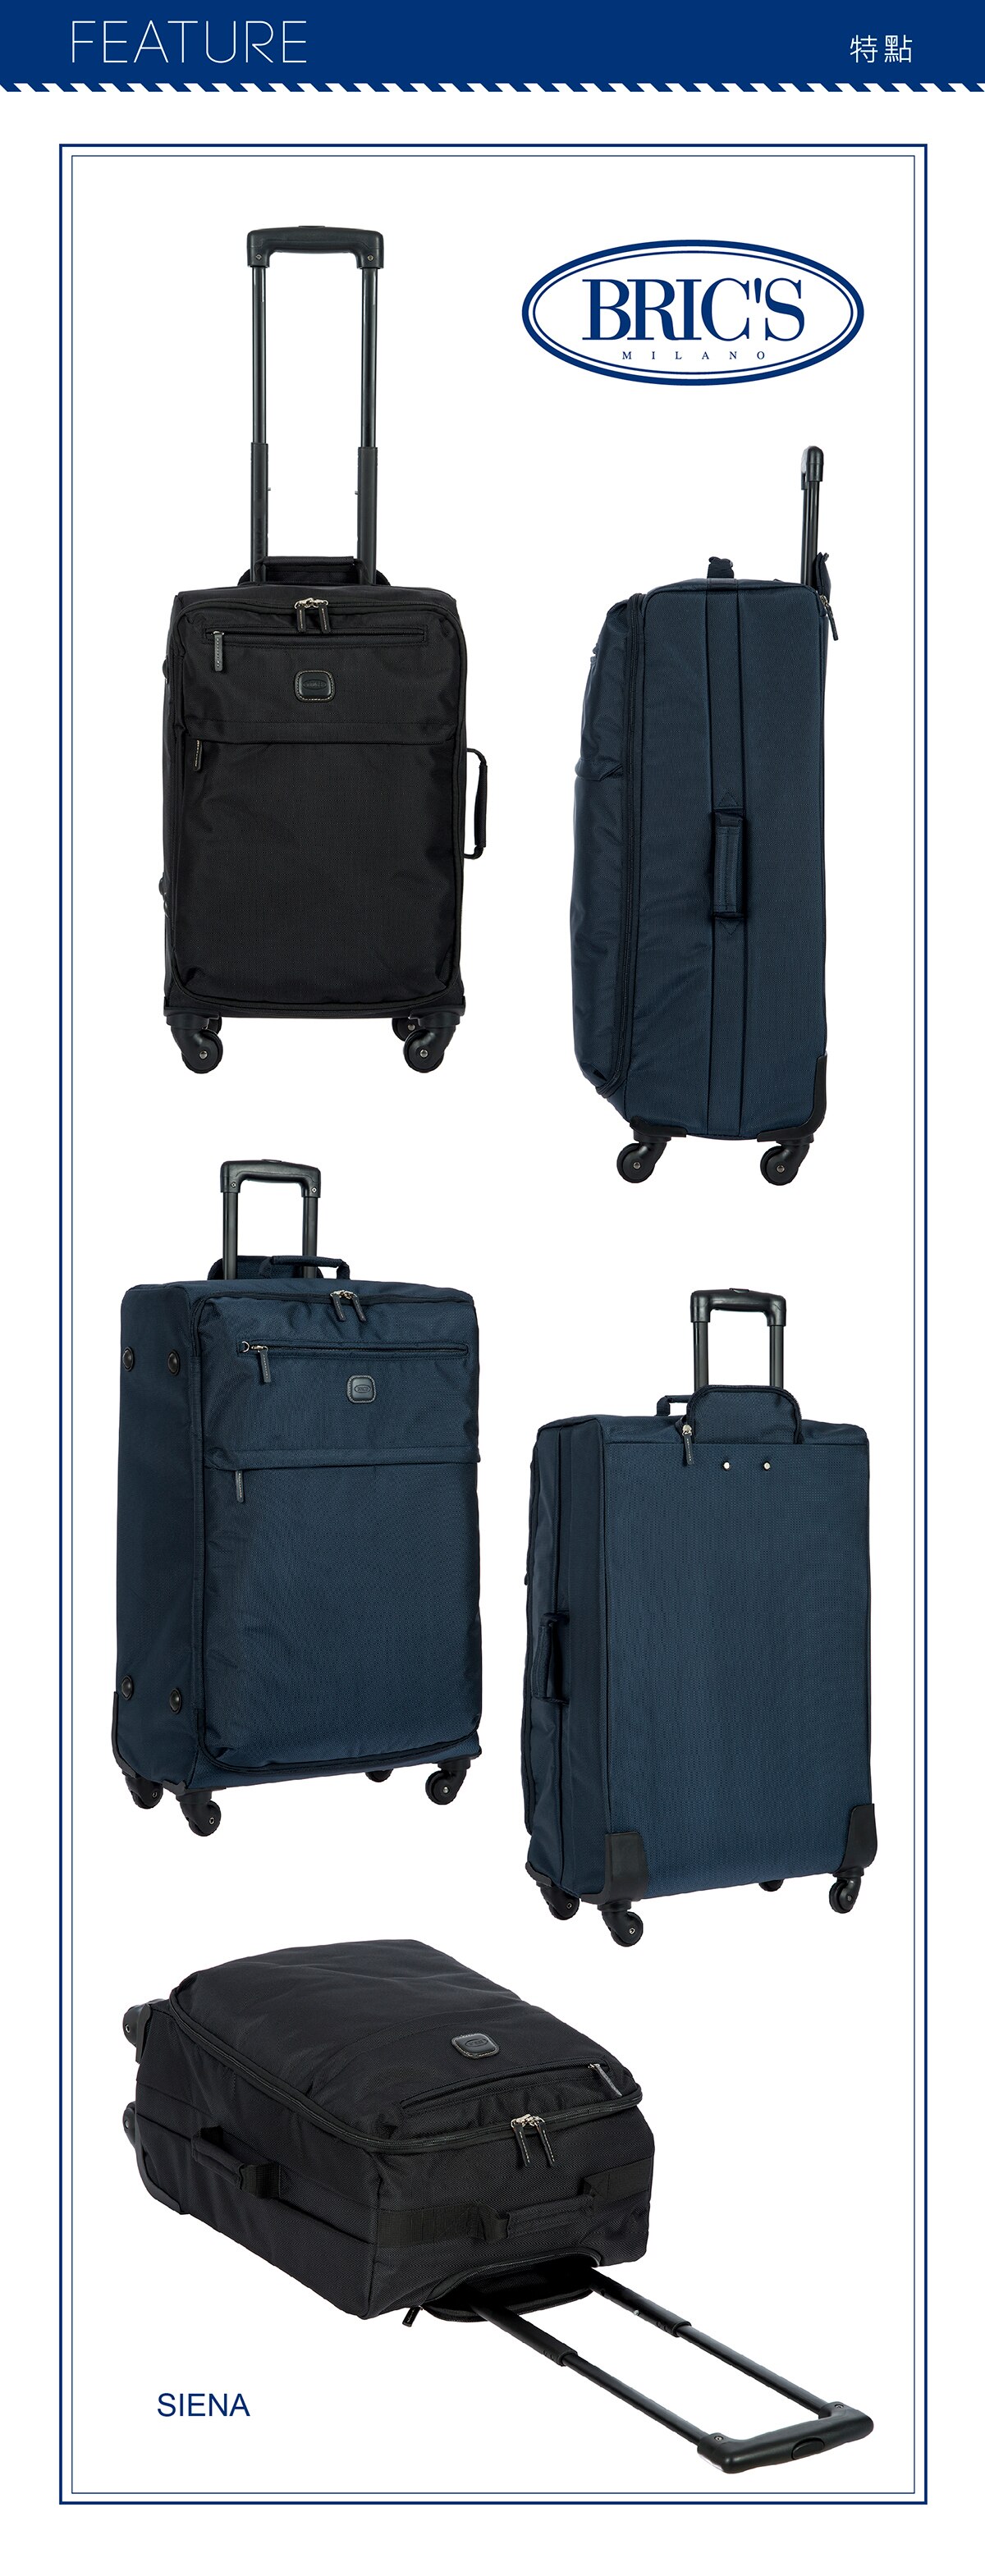 BRIC'S 28吋藍色行李箱,特殊加工尼龍布,Bric's的SIENA系列產品,是採用聚醯胺尼龍材質配上PVC襯底,既輕巧又防水,耐用又好清潔.